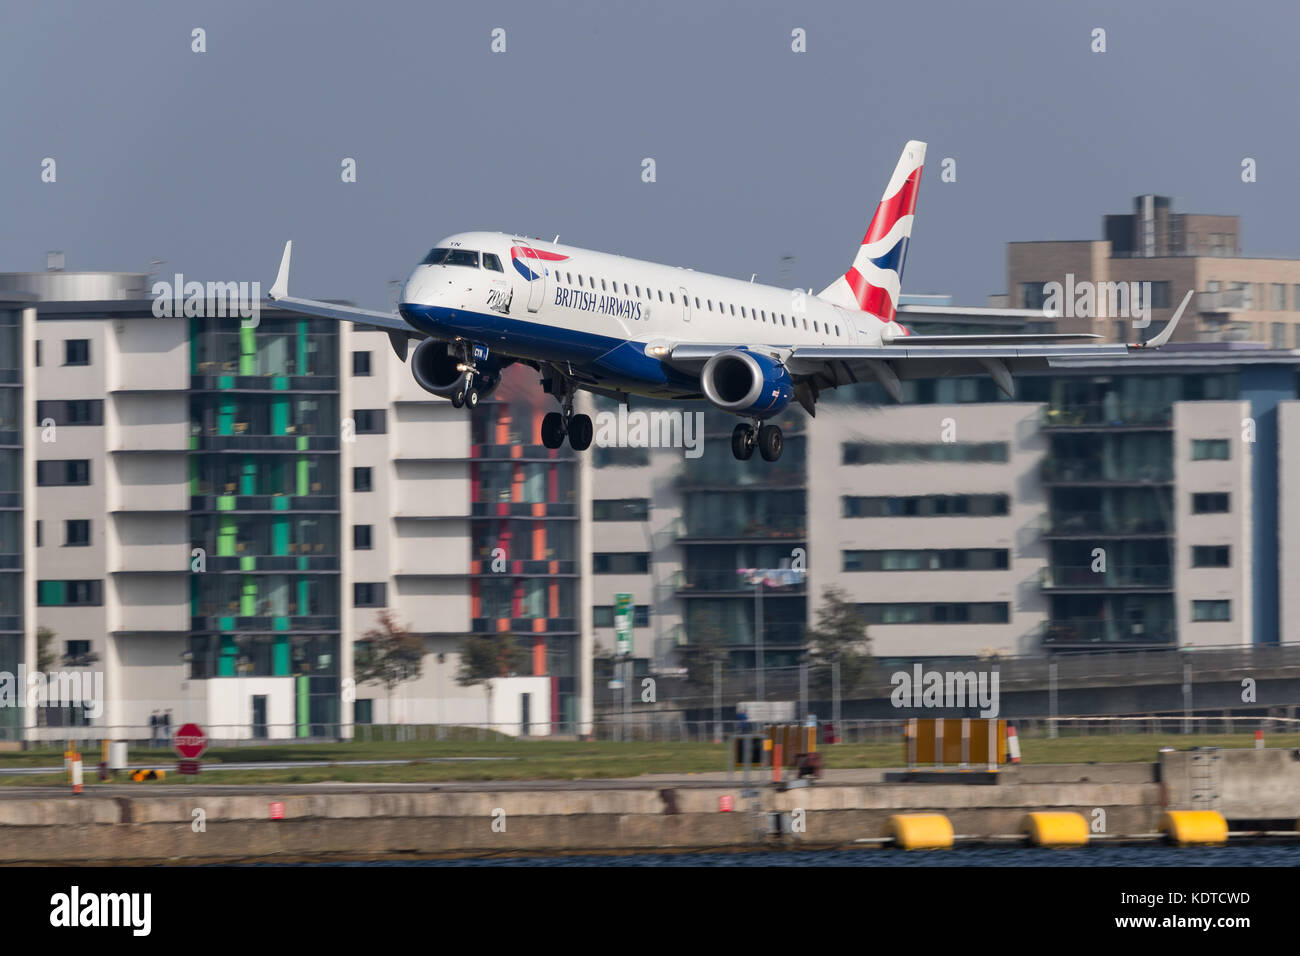 British Airways aircraft at london City Airport. Stock Photo